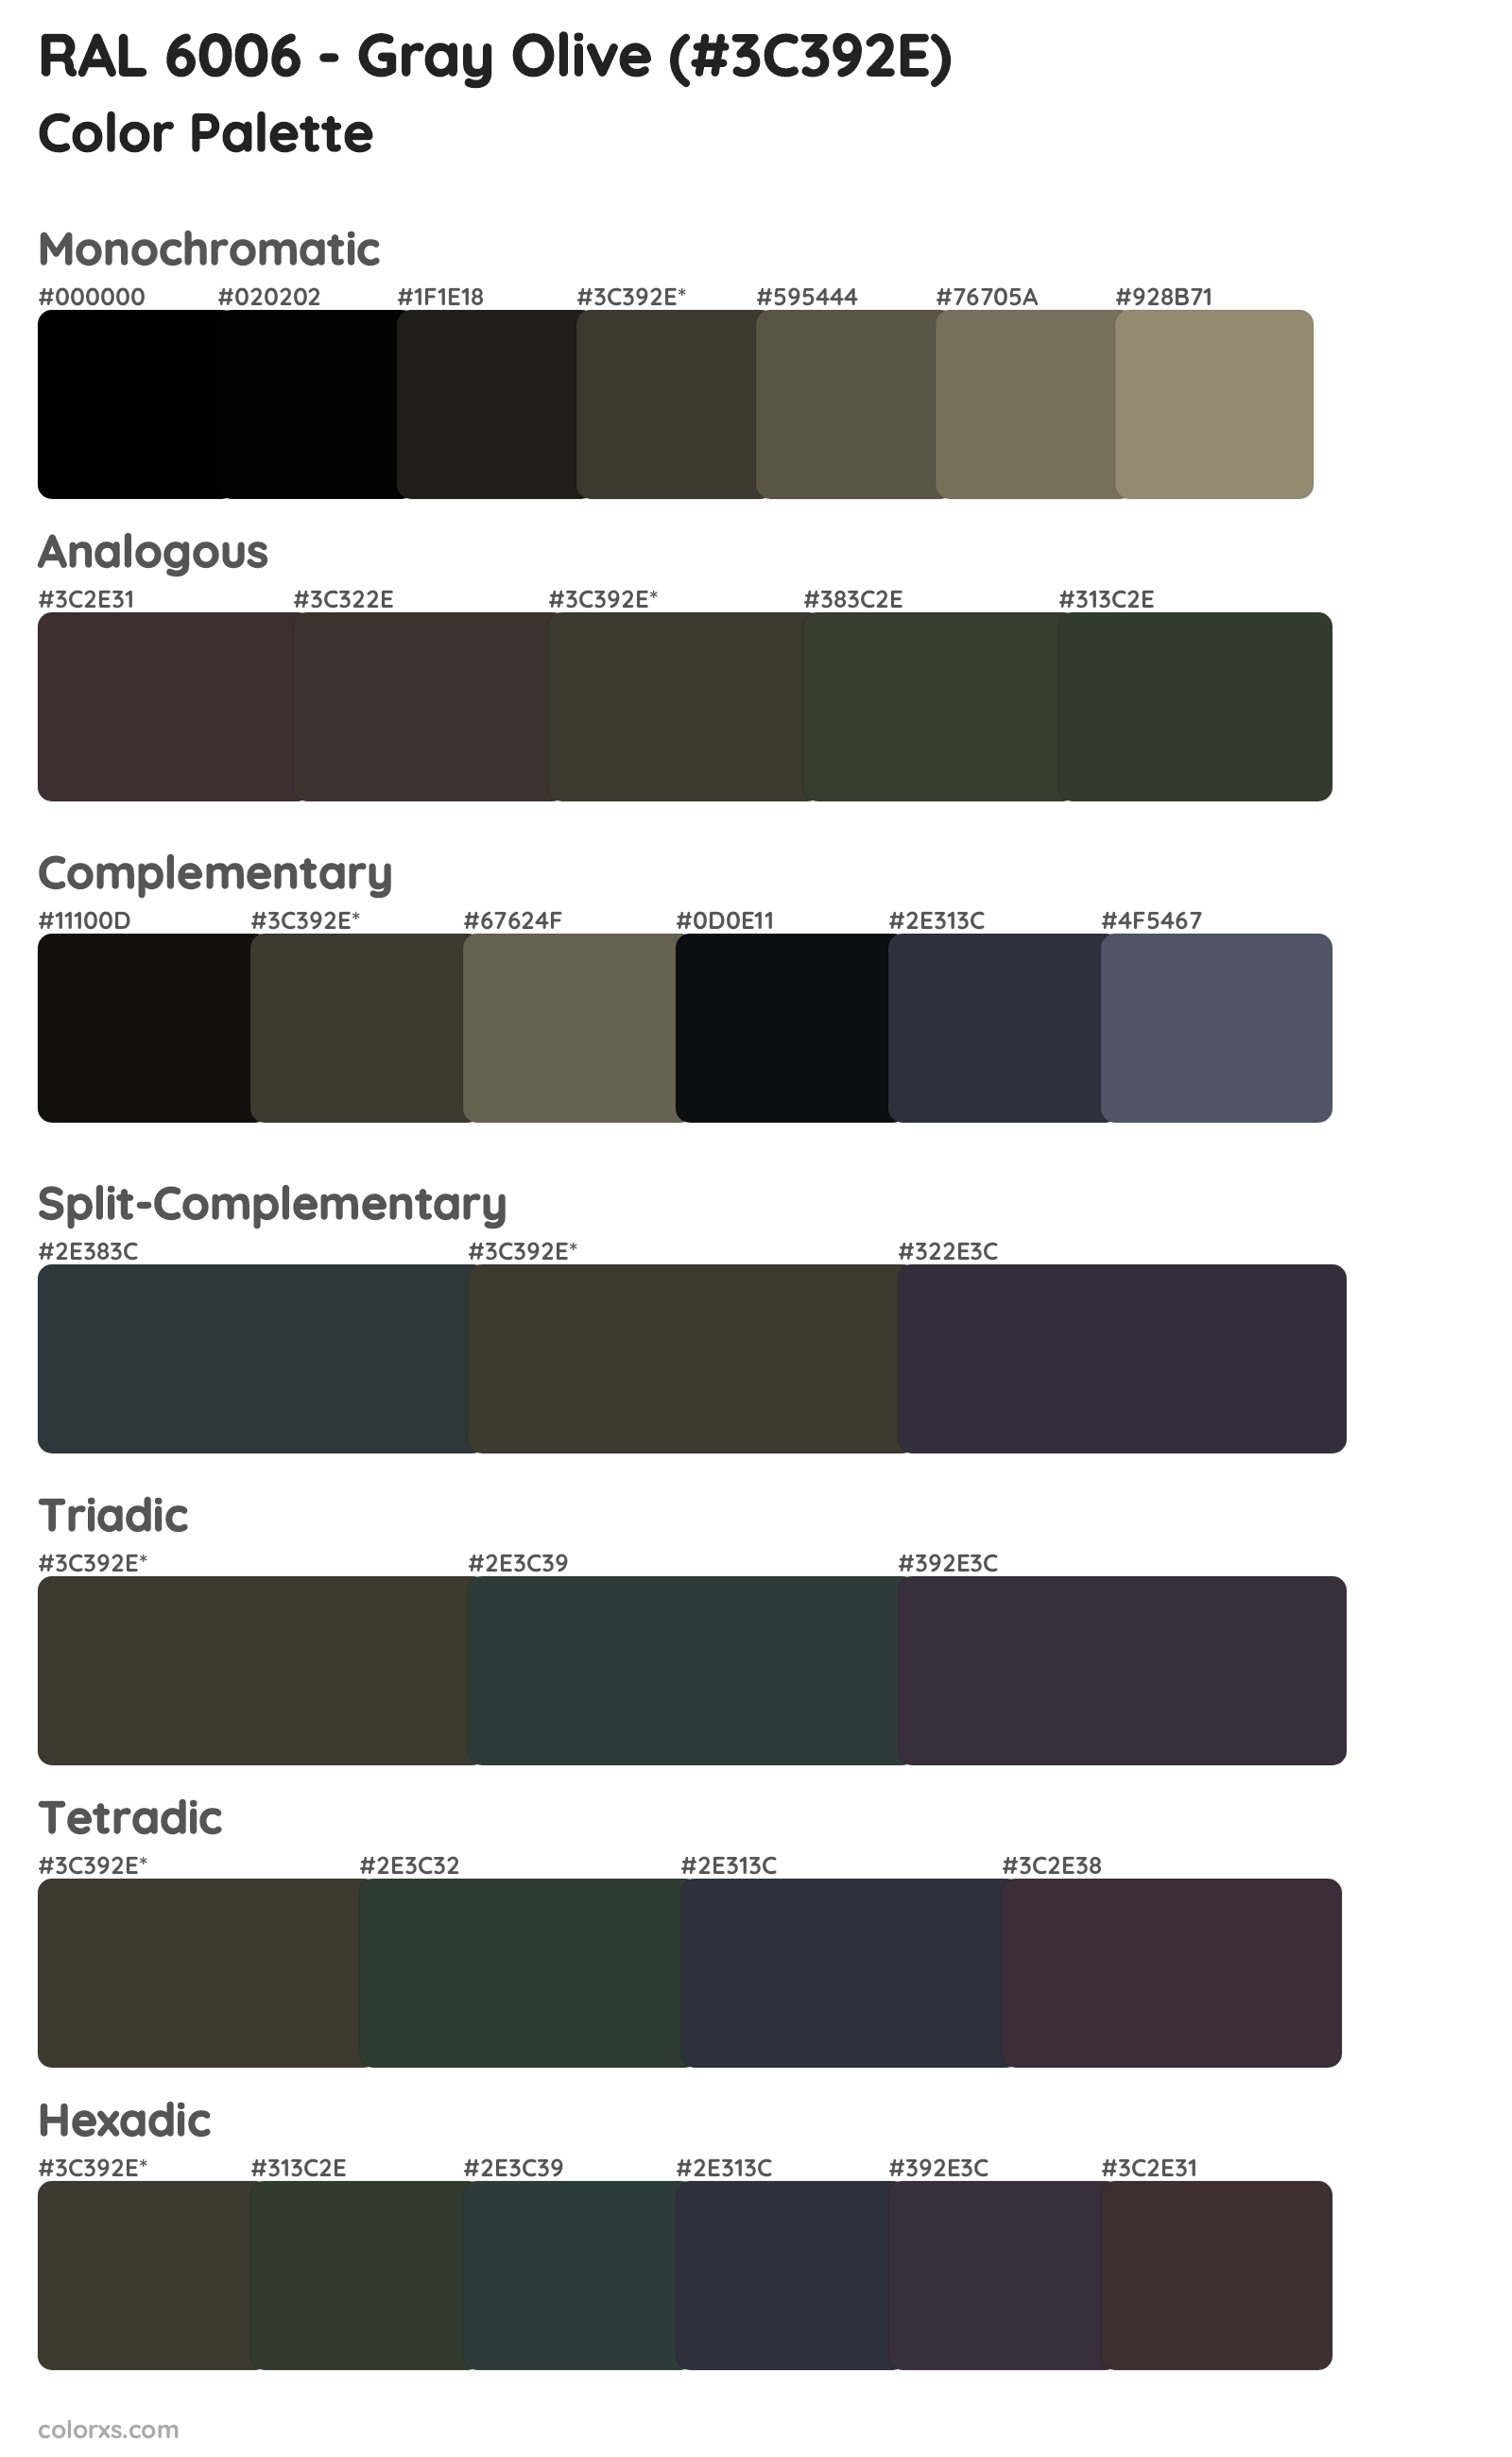 RAL 6006 - Gray Olive Color Scheme Palettes